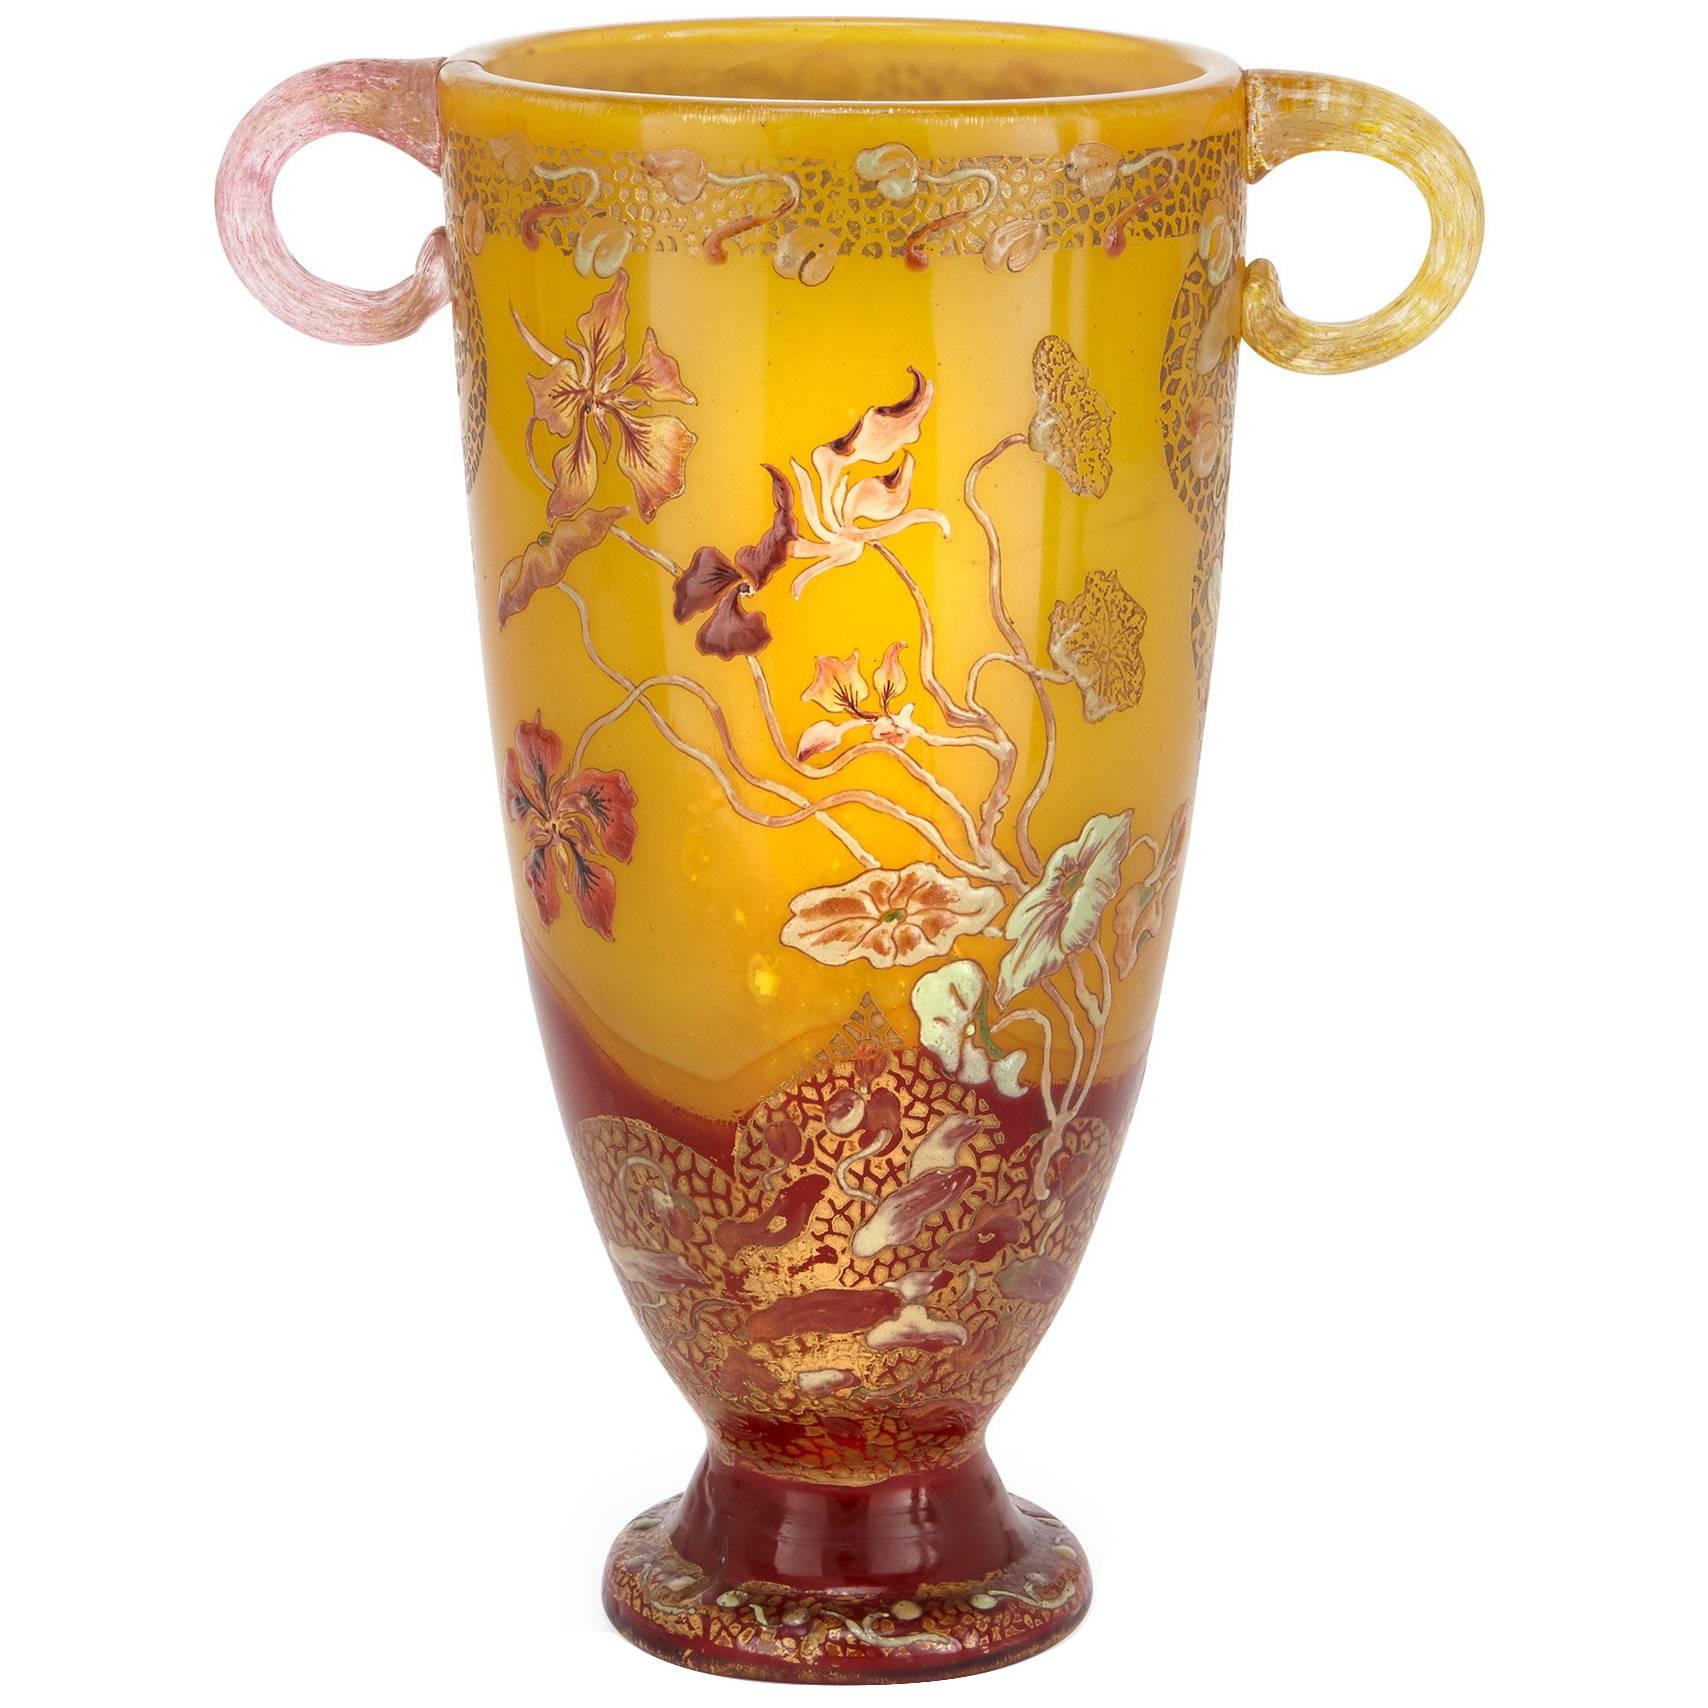 Antique Art Nouveau Style Yellow Glass Vase with Twin Handles by Emile Gallé